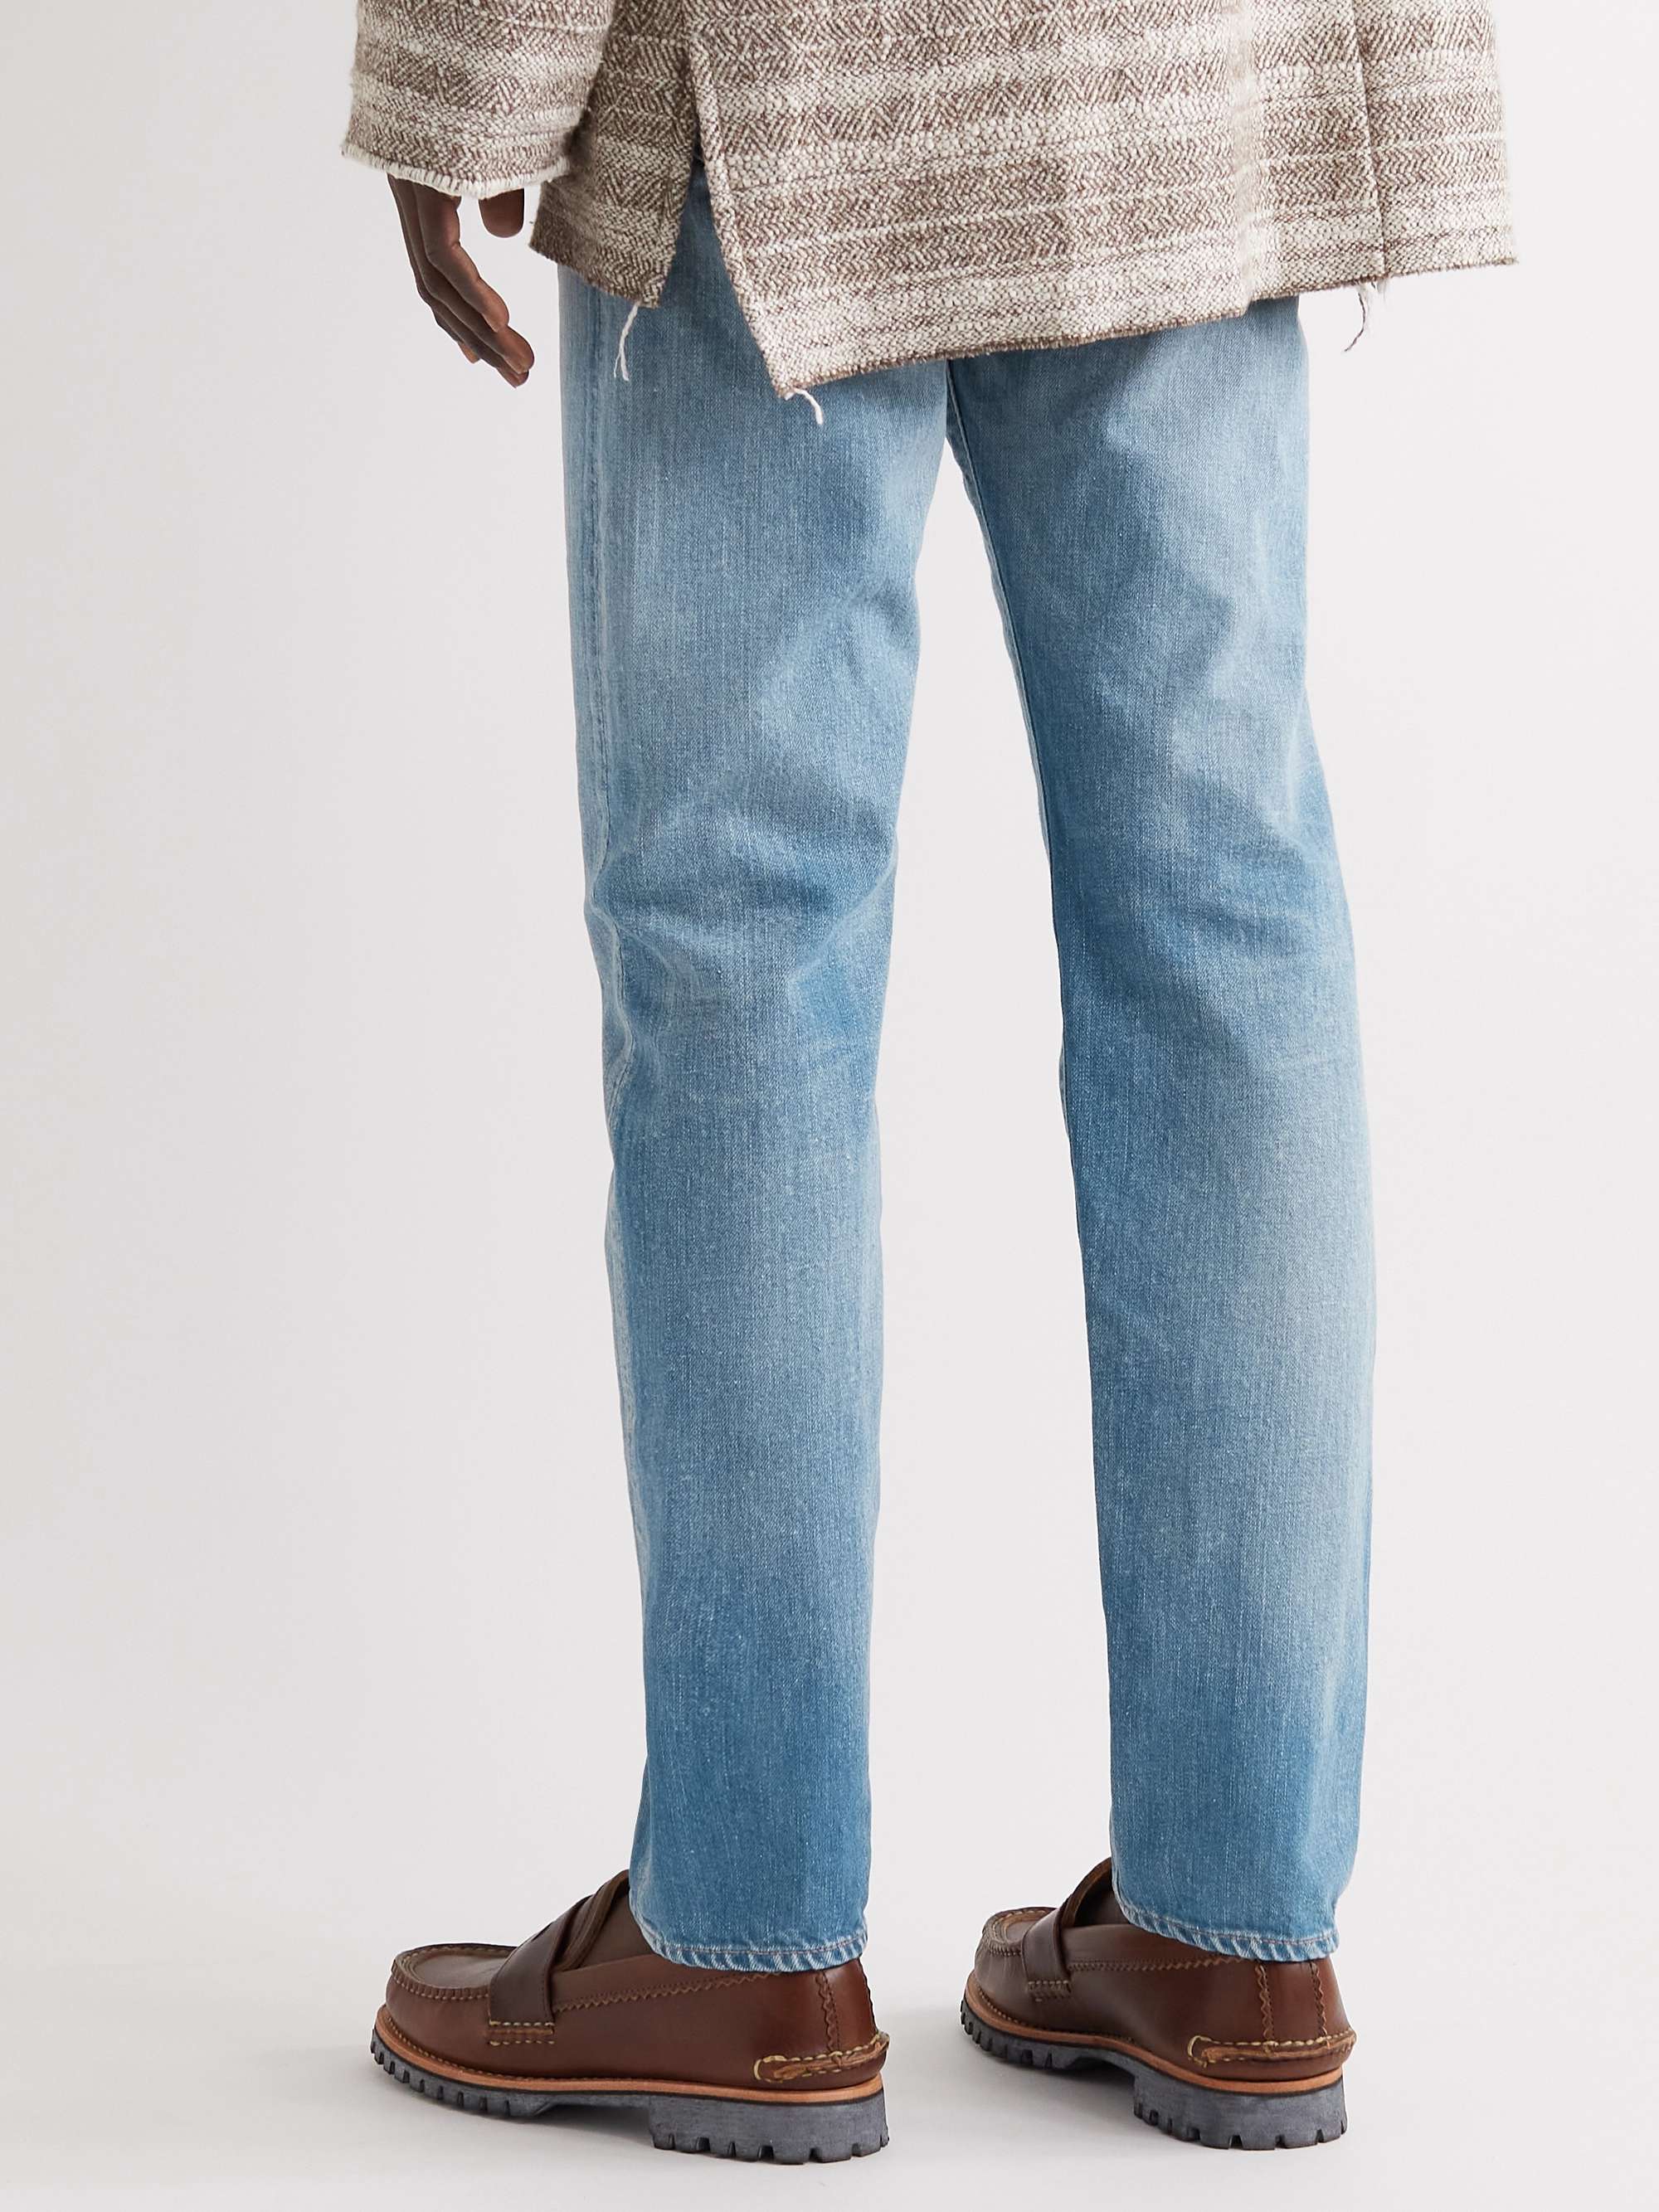 COTTLE Slim-Fit Distressed Selvedge Jeans